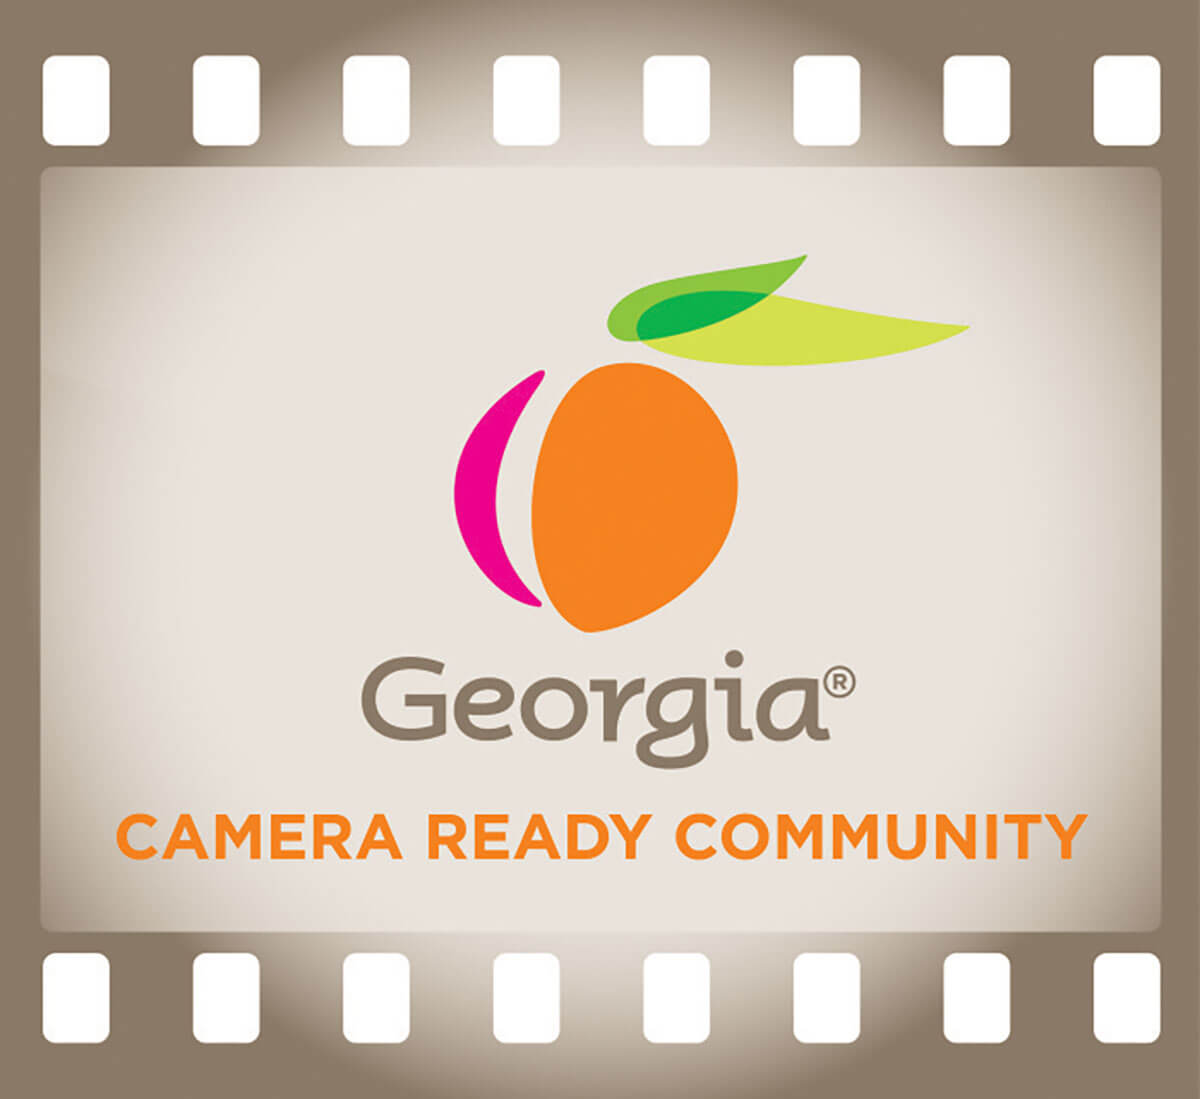 ga-camera-ready-community-logo.jpg